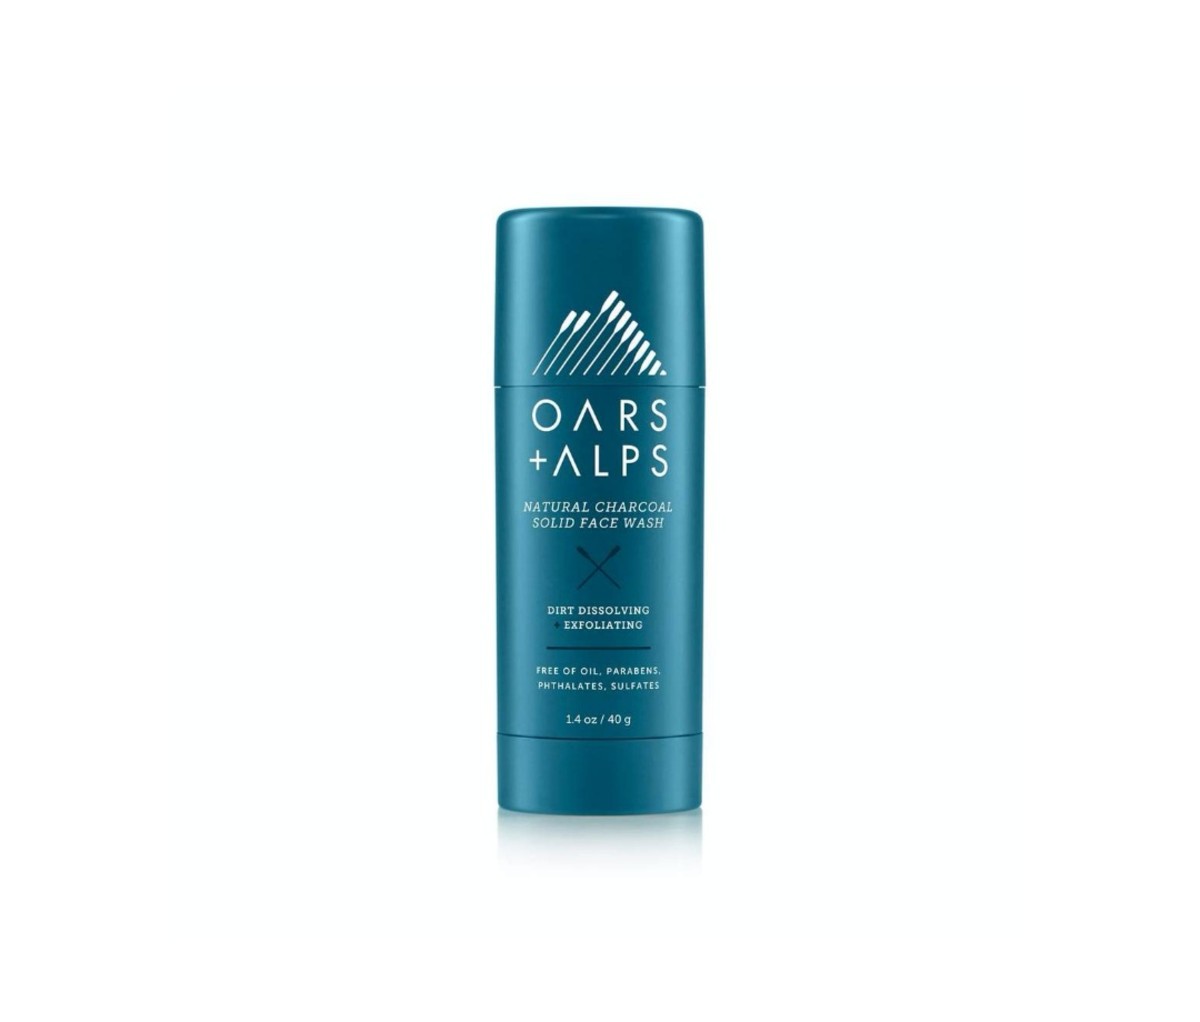 Oars + Alps Solid Face Wash best face wash for men